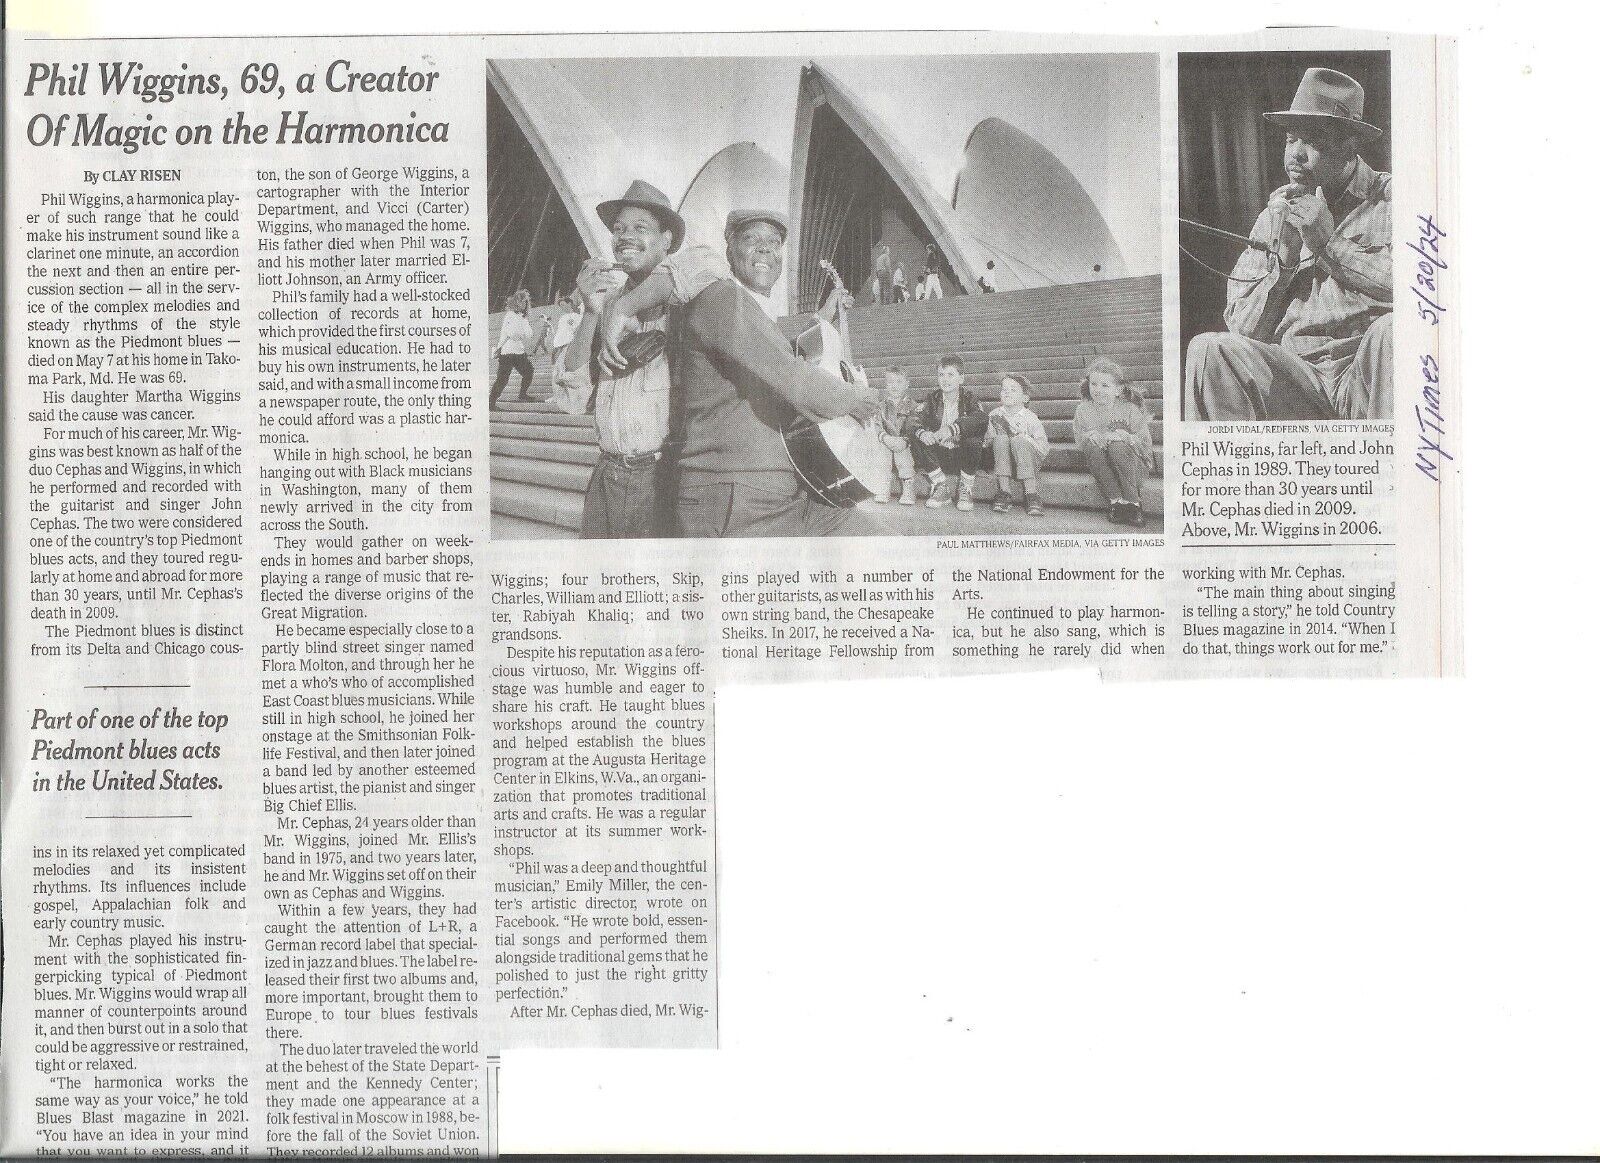 Phil Wiggins Obituary - New York Times 5/14/24- Magic on Harmonica